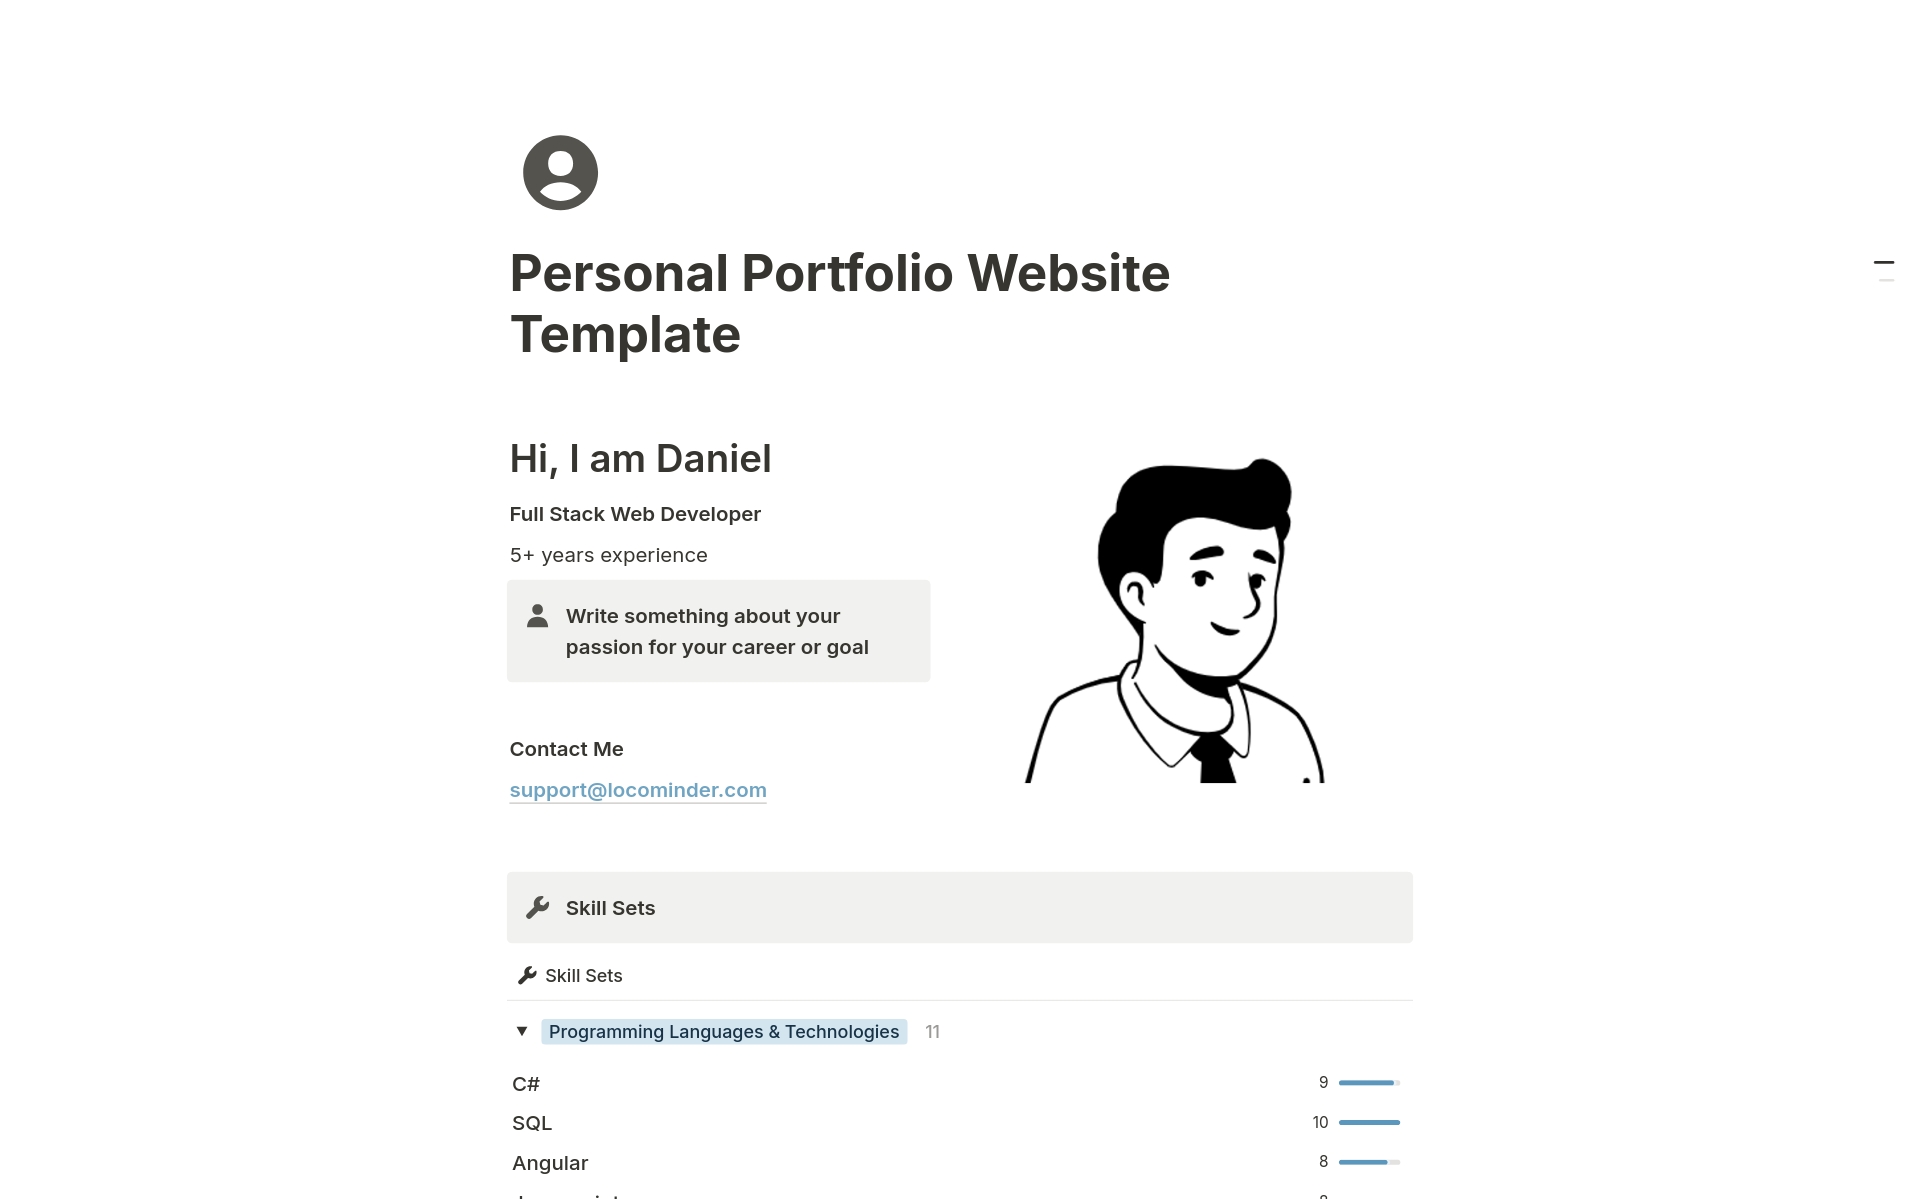 Aperçu du modèle de Personal Portfolio Website